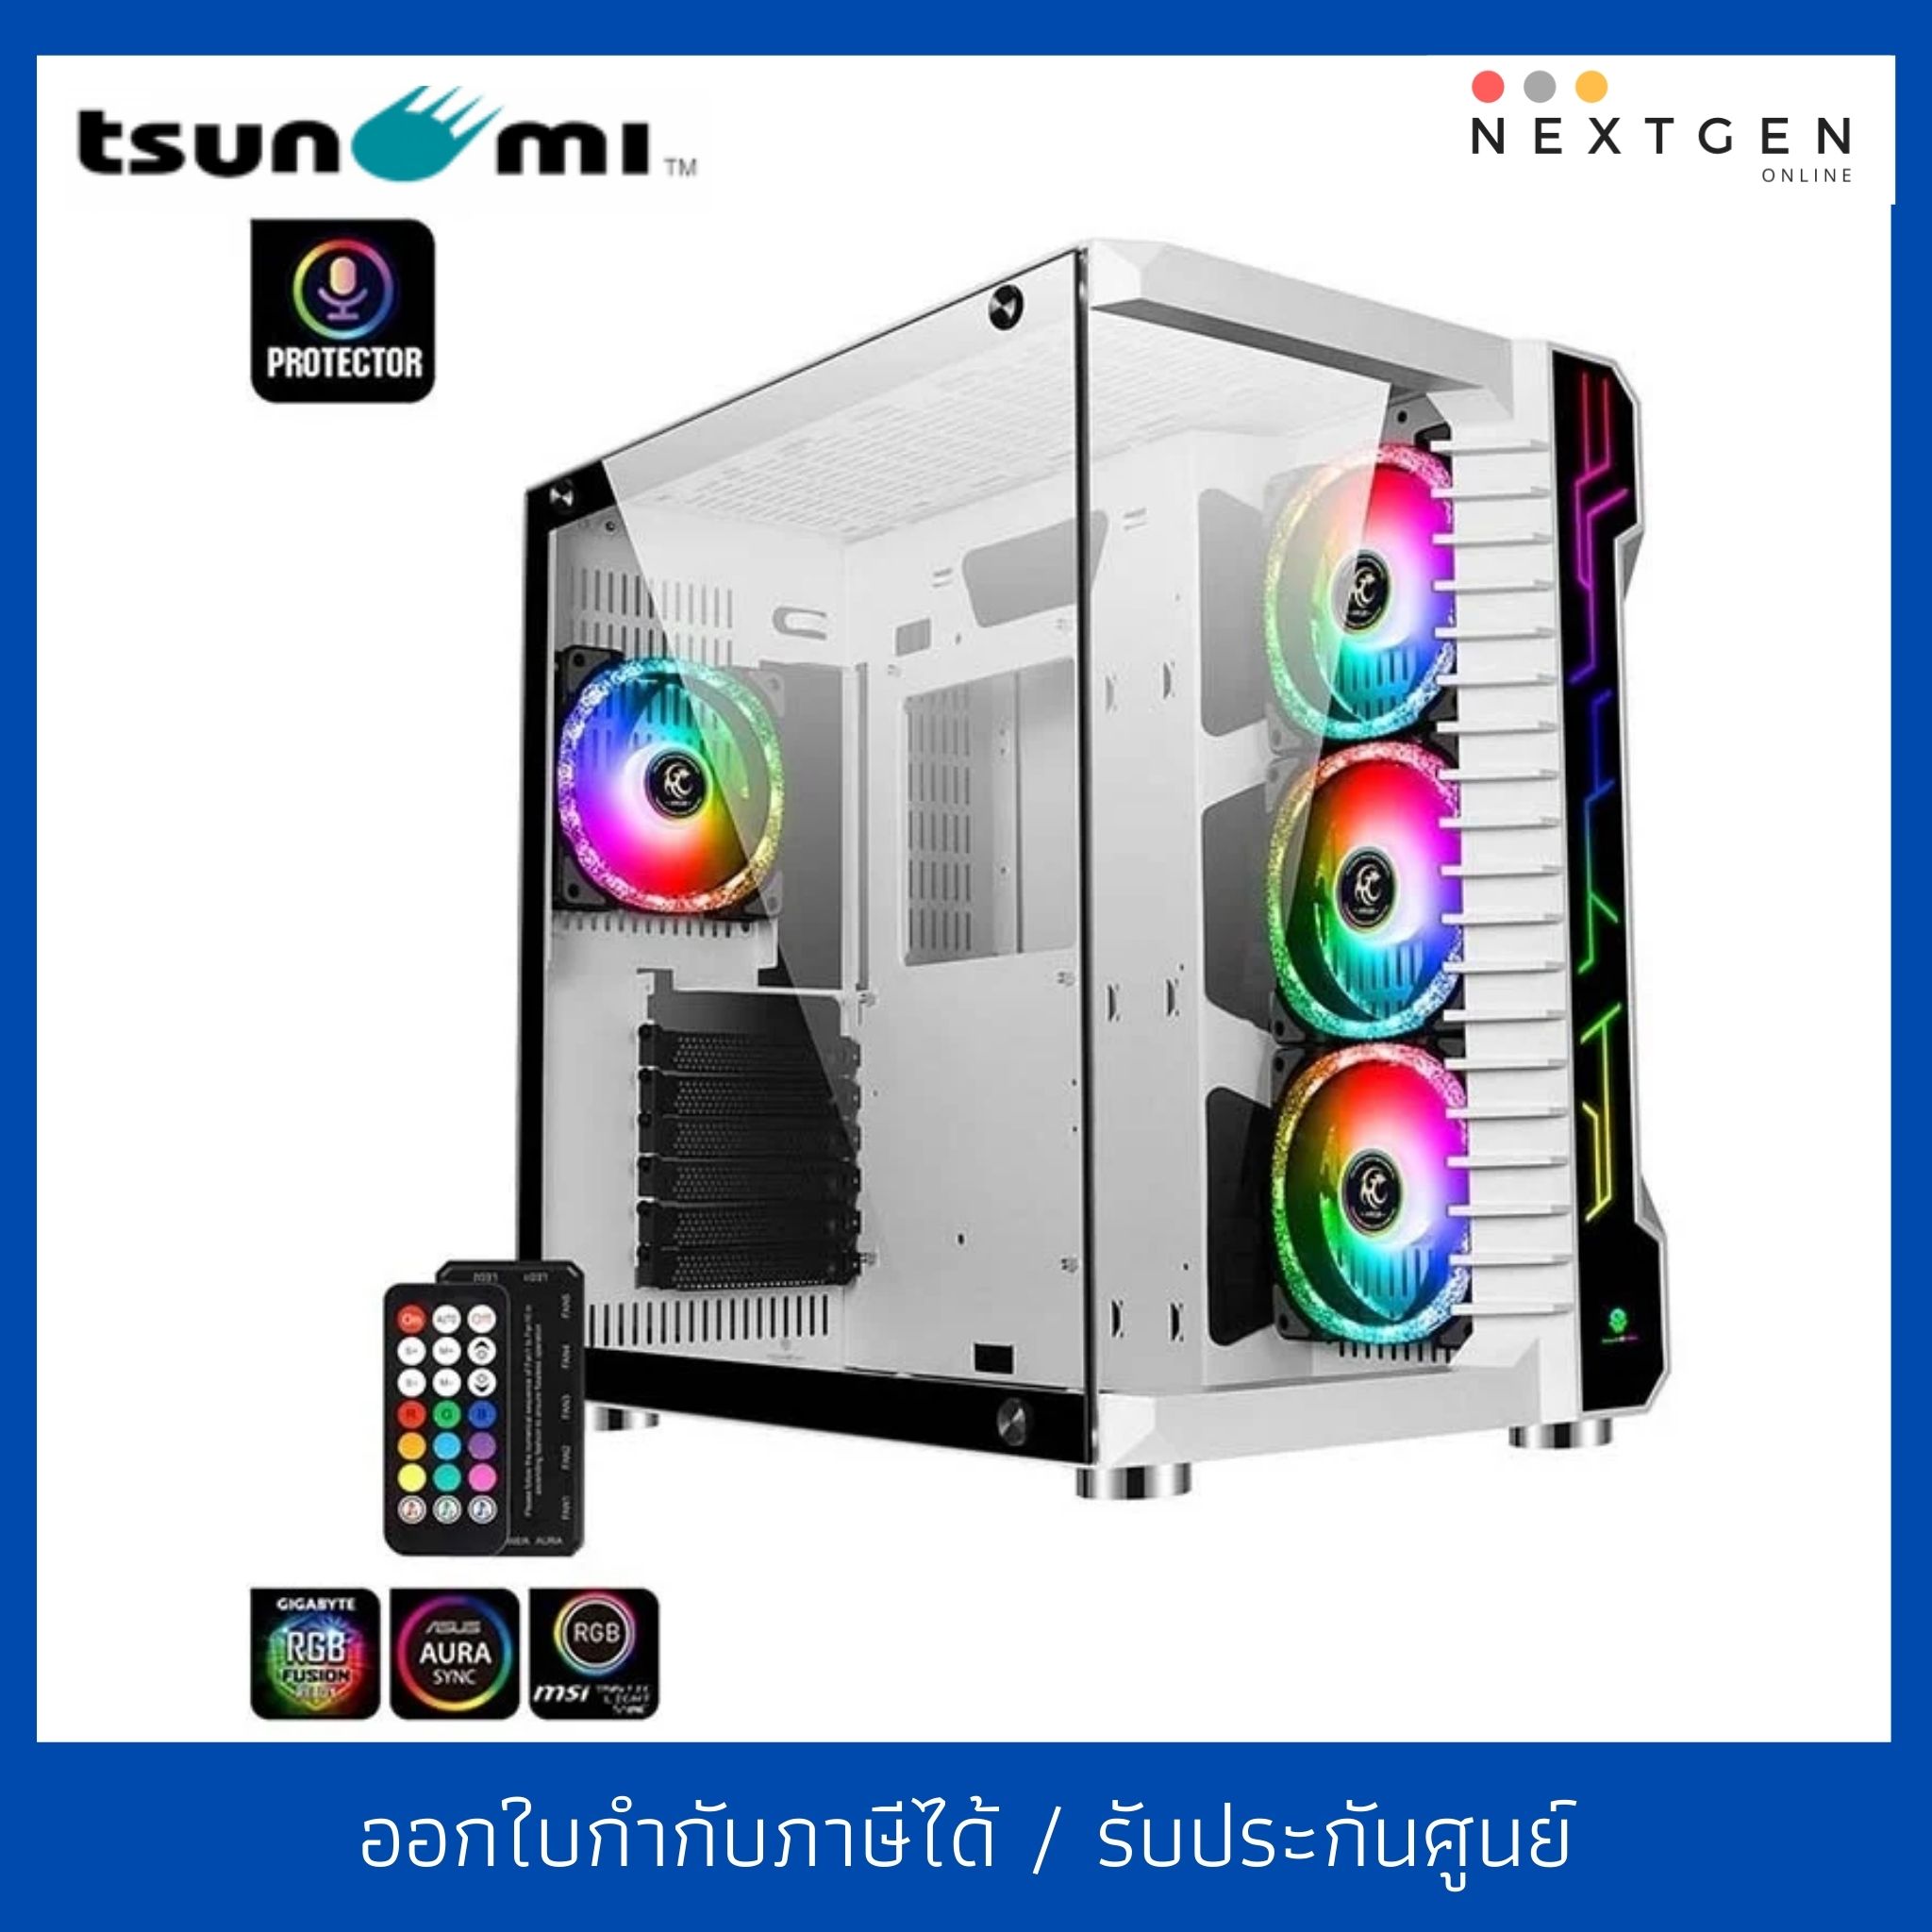 TSUNAMI Protector Vision II ATX Case+ Diamond ARGB 12CM ARGB Cooling Fan สีขาว พัดลมรุ่นใหม่ พร้อมรีโมทควบคุม